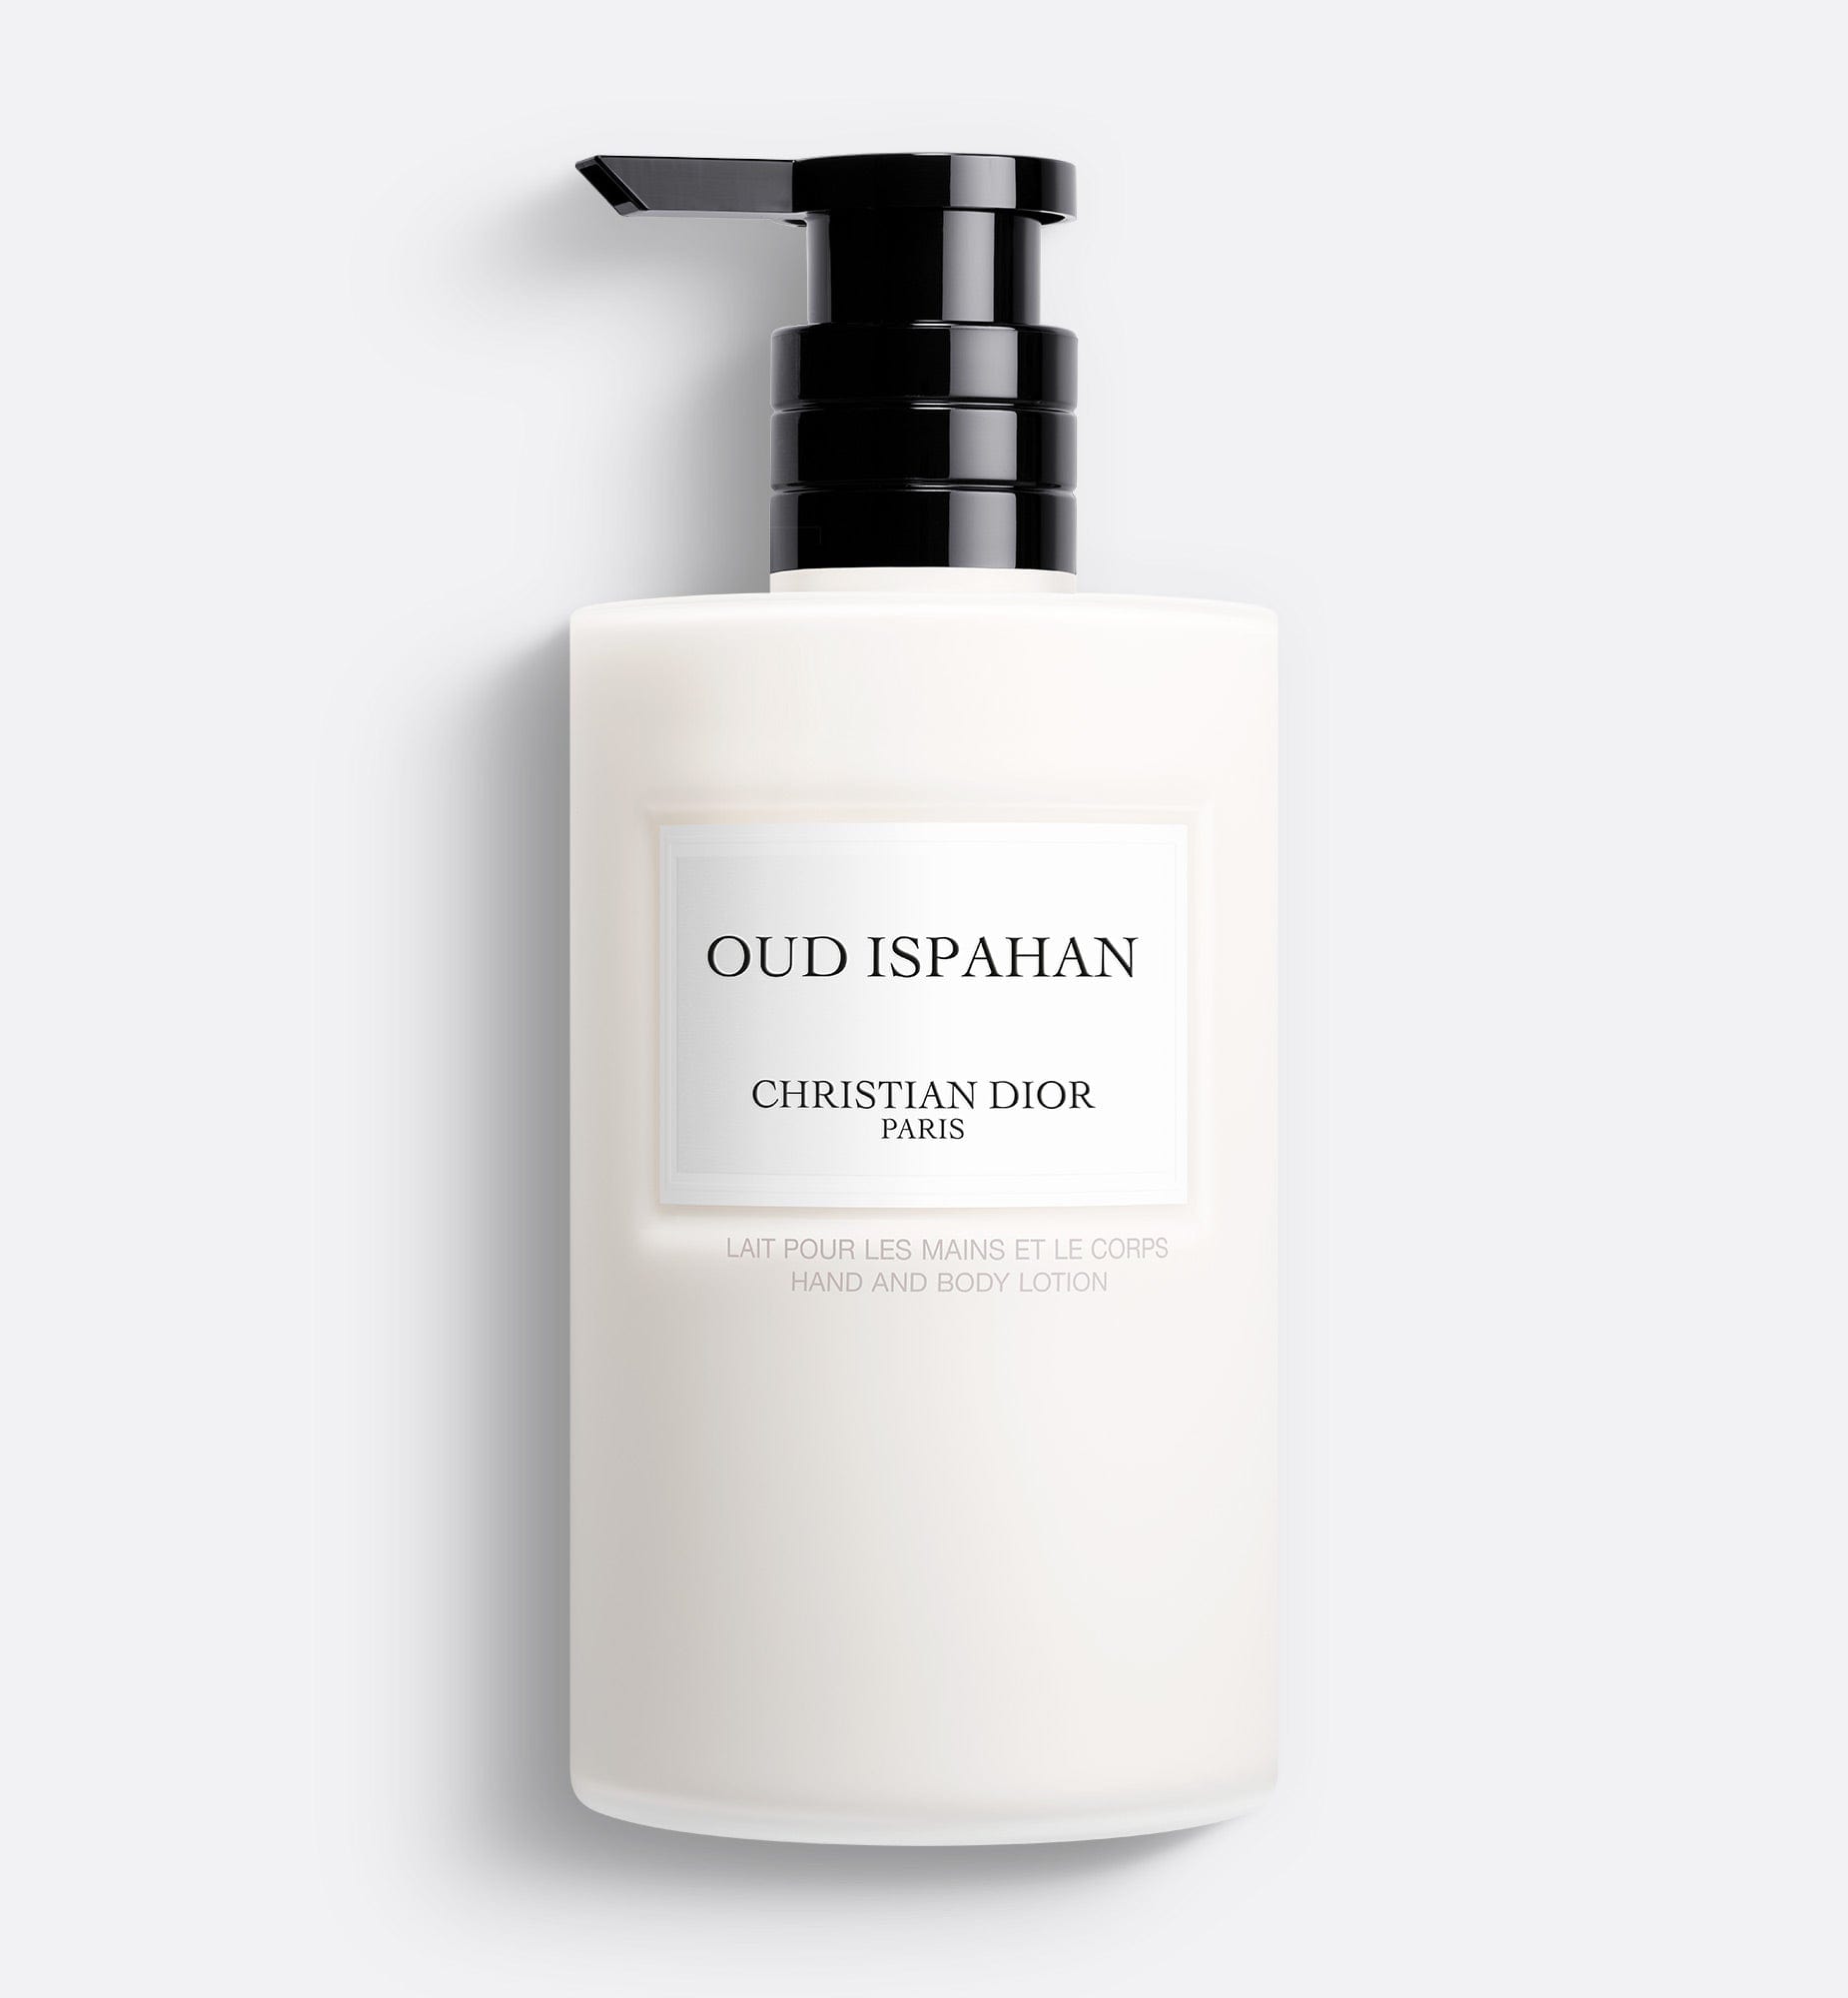 Oud Ispahan身體保濕乳液 | 手部及身體乳液